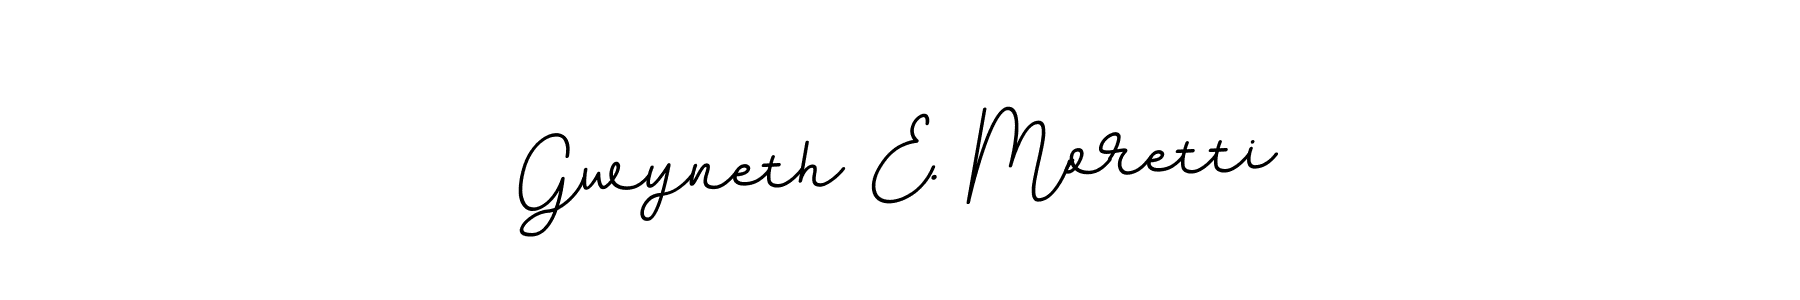 How to Draw Gwyneth E. Moretti signature style? BallpointsItalic-DORy9 is a latest design signature styles for name Gwyneth E. Moretti. Gwyneth E. Moretti signature style 11 images and pictures png